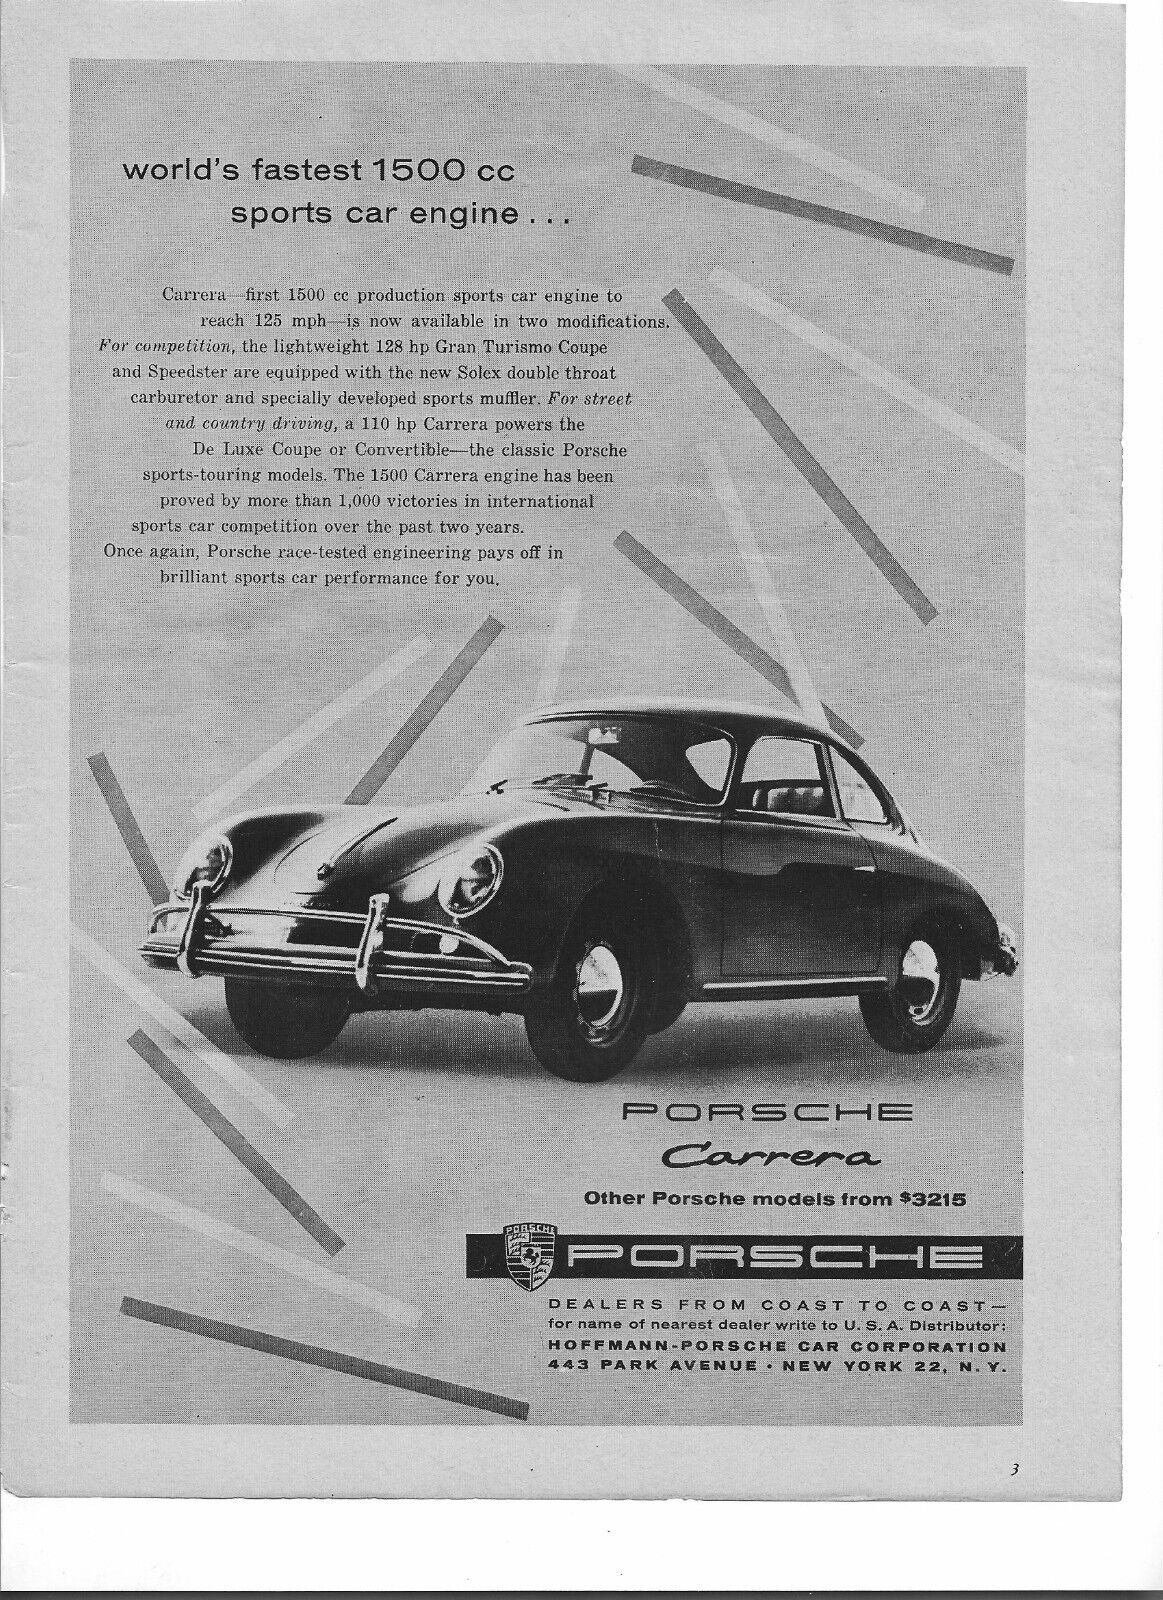 Original 1957 Porsche 356 vintage print ad, advertising